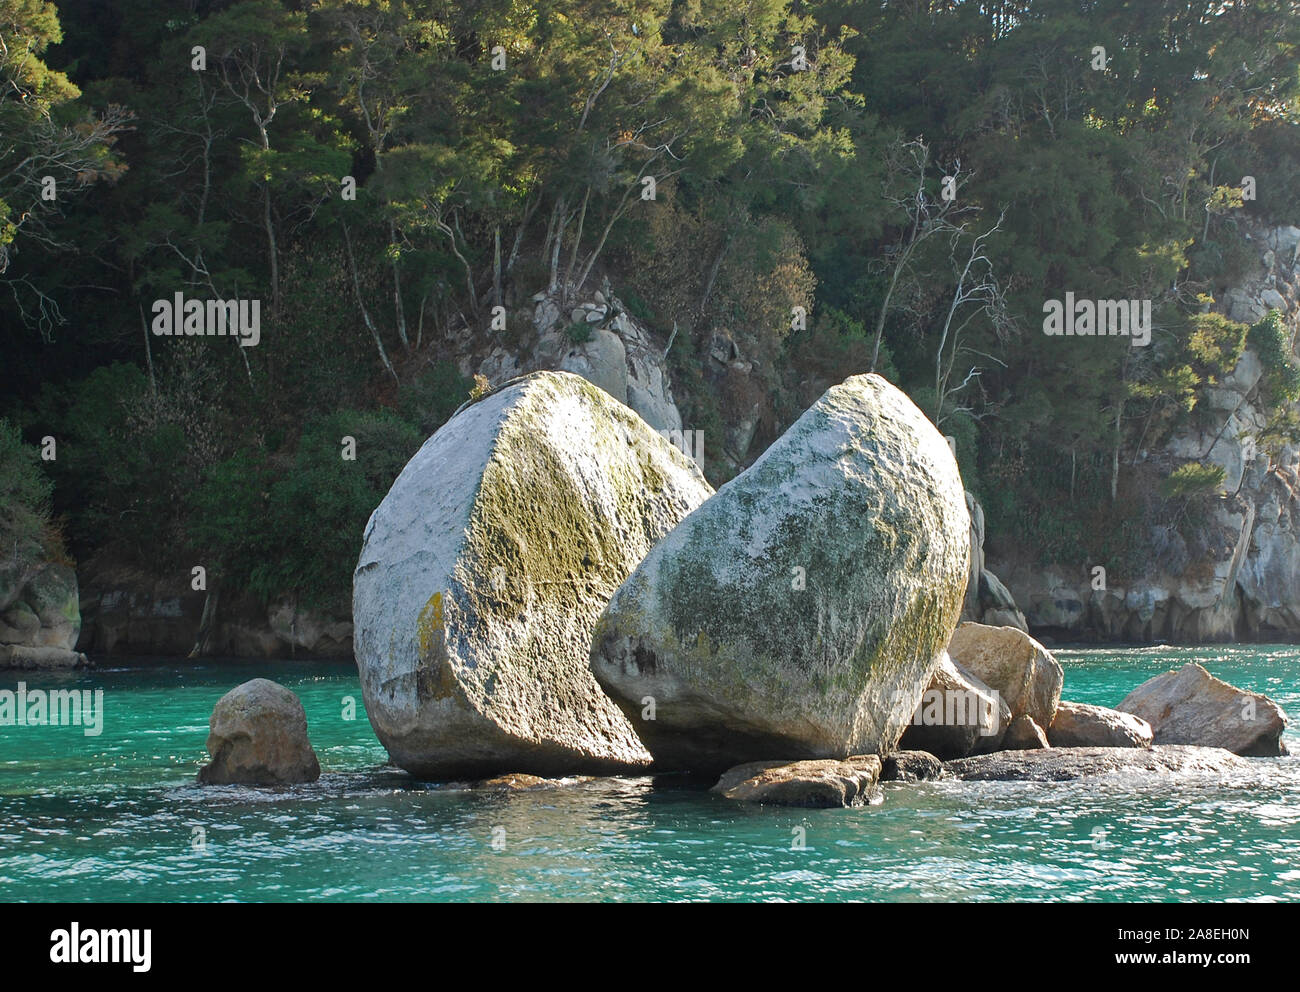 Split Apple Rock, South Island, New Zealand Stock Photo